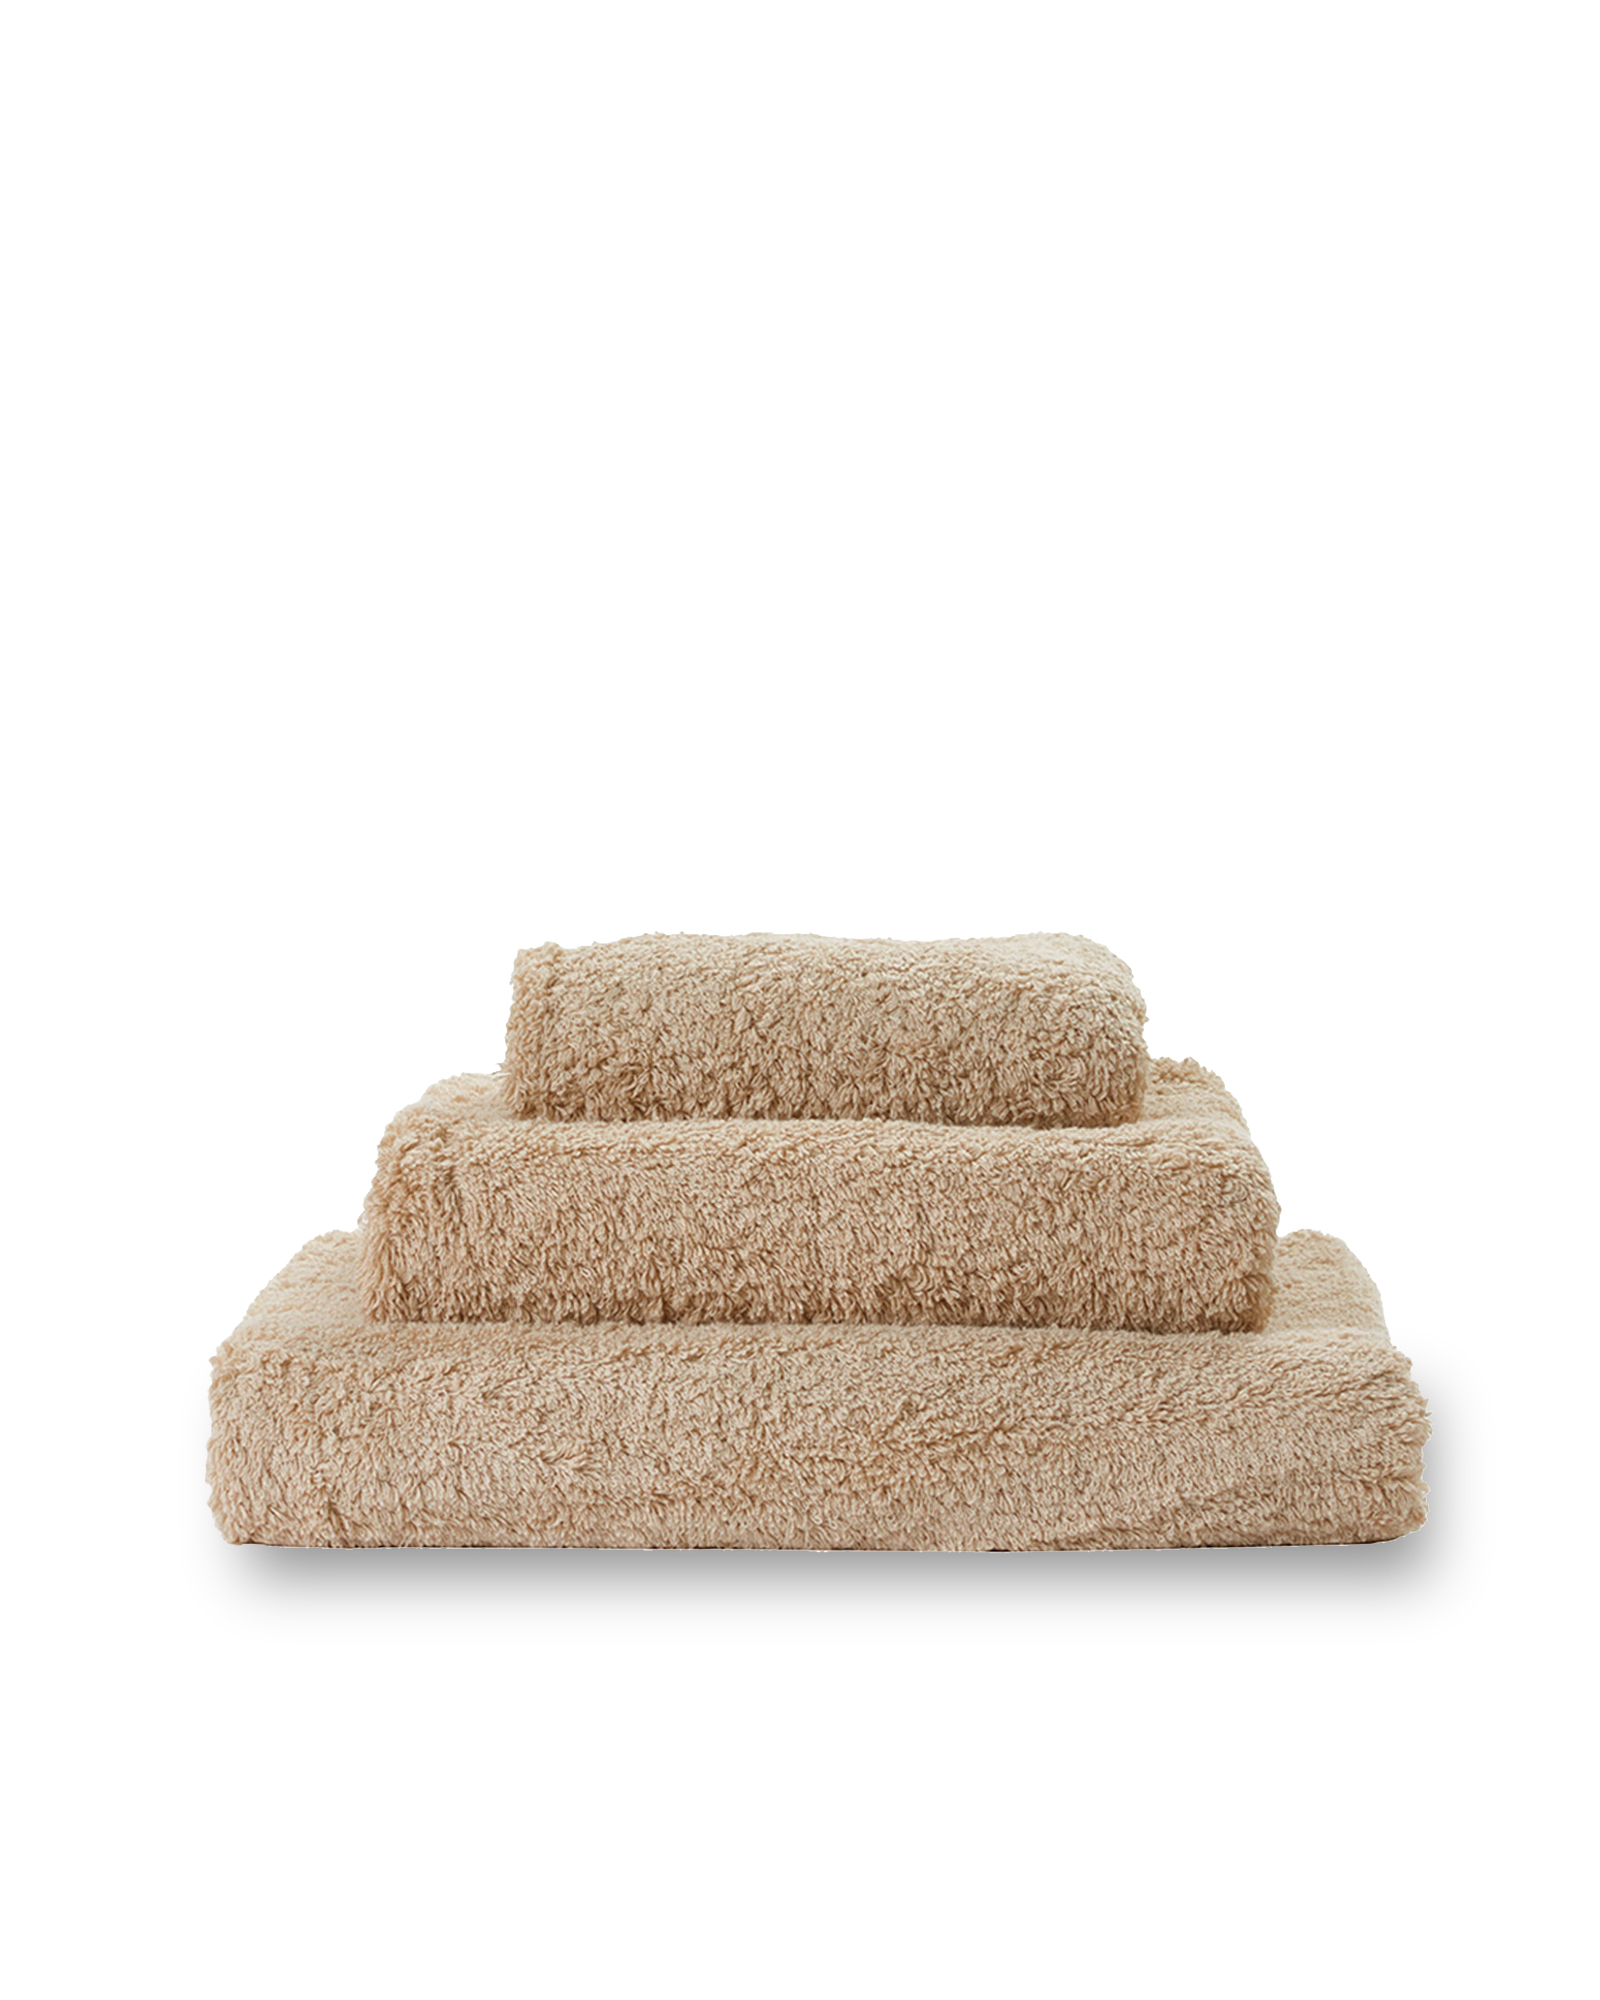 Abyss & Habidecor - Bath towel SUPER PILE 714 Sand - 70x140 cm - 714 Sand 